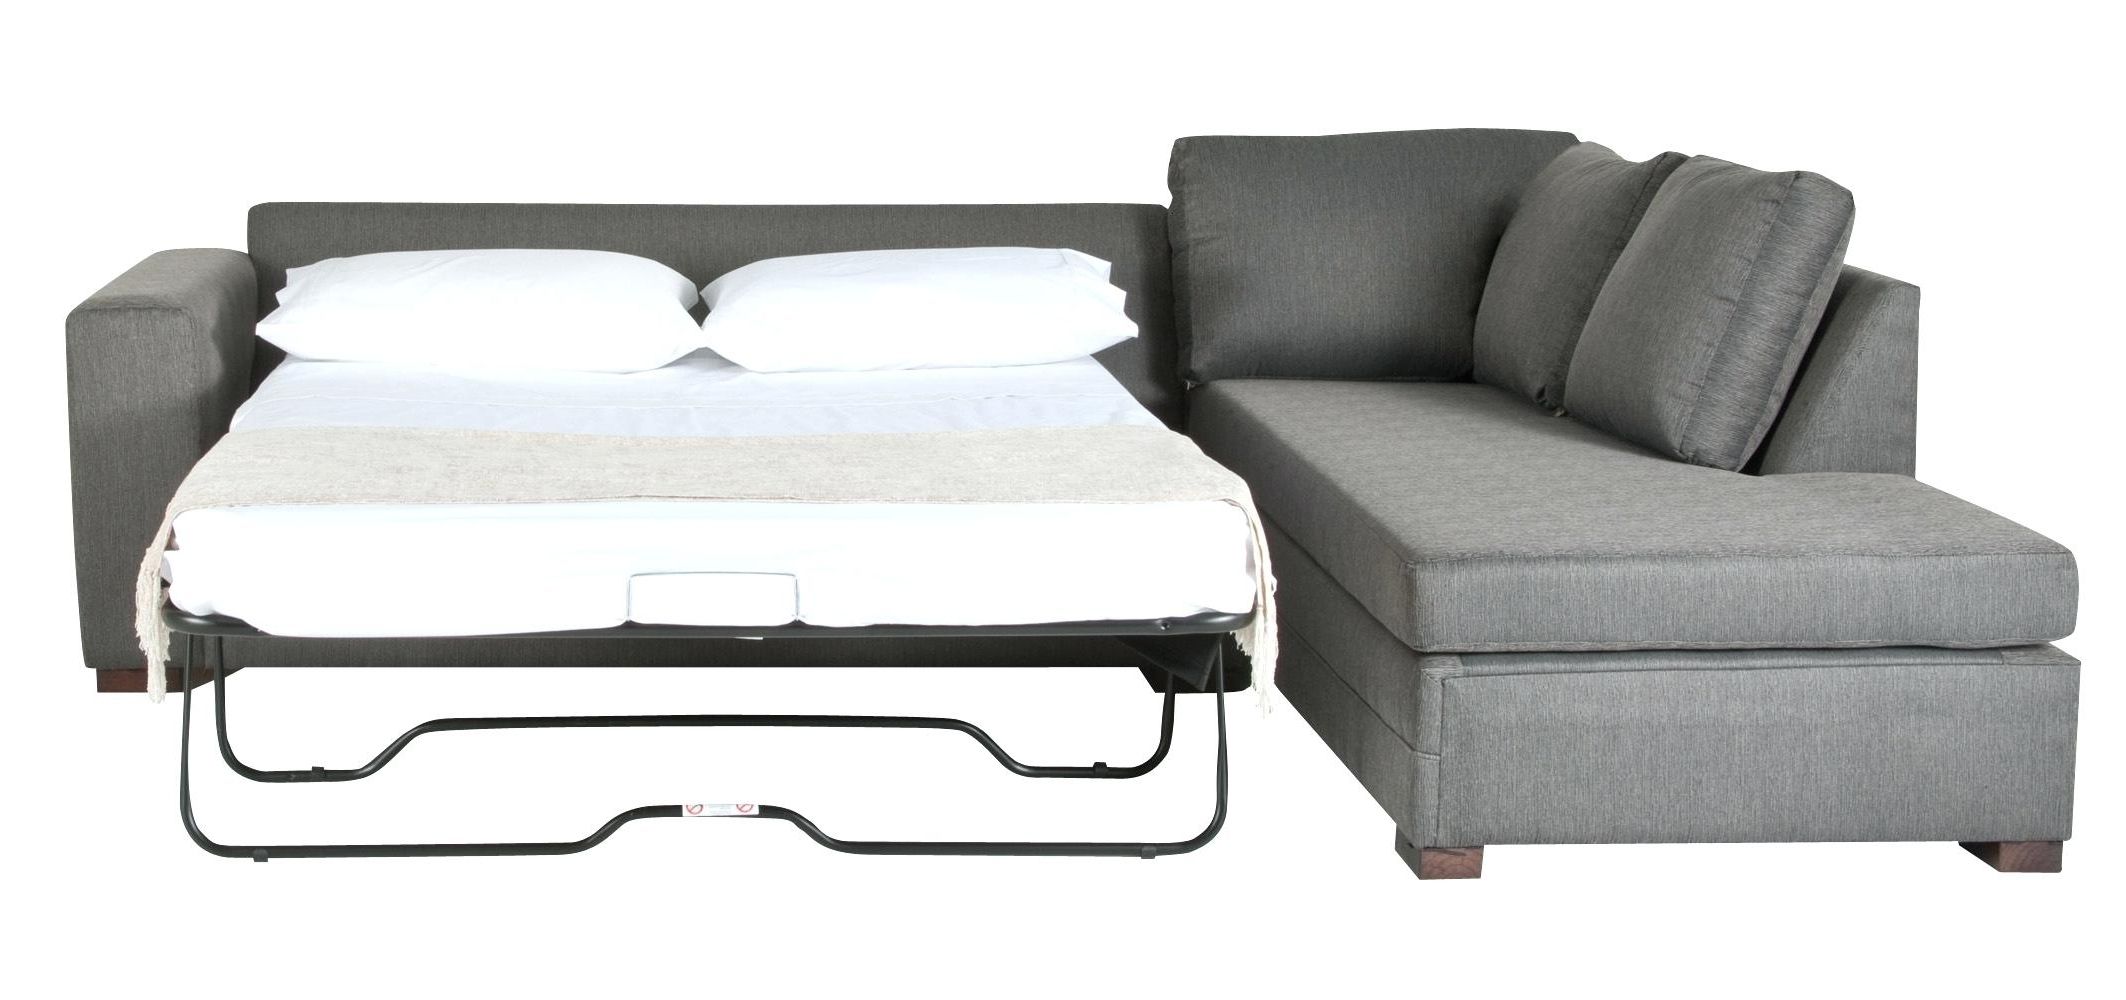 2017 Kijiji Montreal Sectional Sofas Pertaining To Sofa Bed Sectional Sagraceful Sa Montreal Modern Canada Adjustable (View 2 of 15)